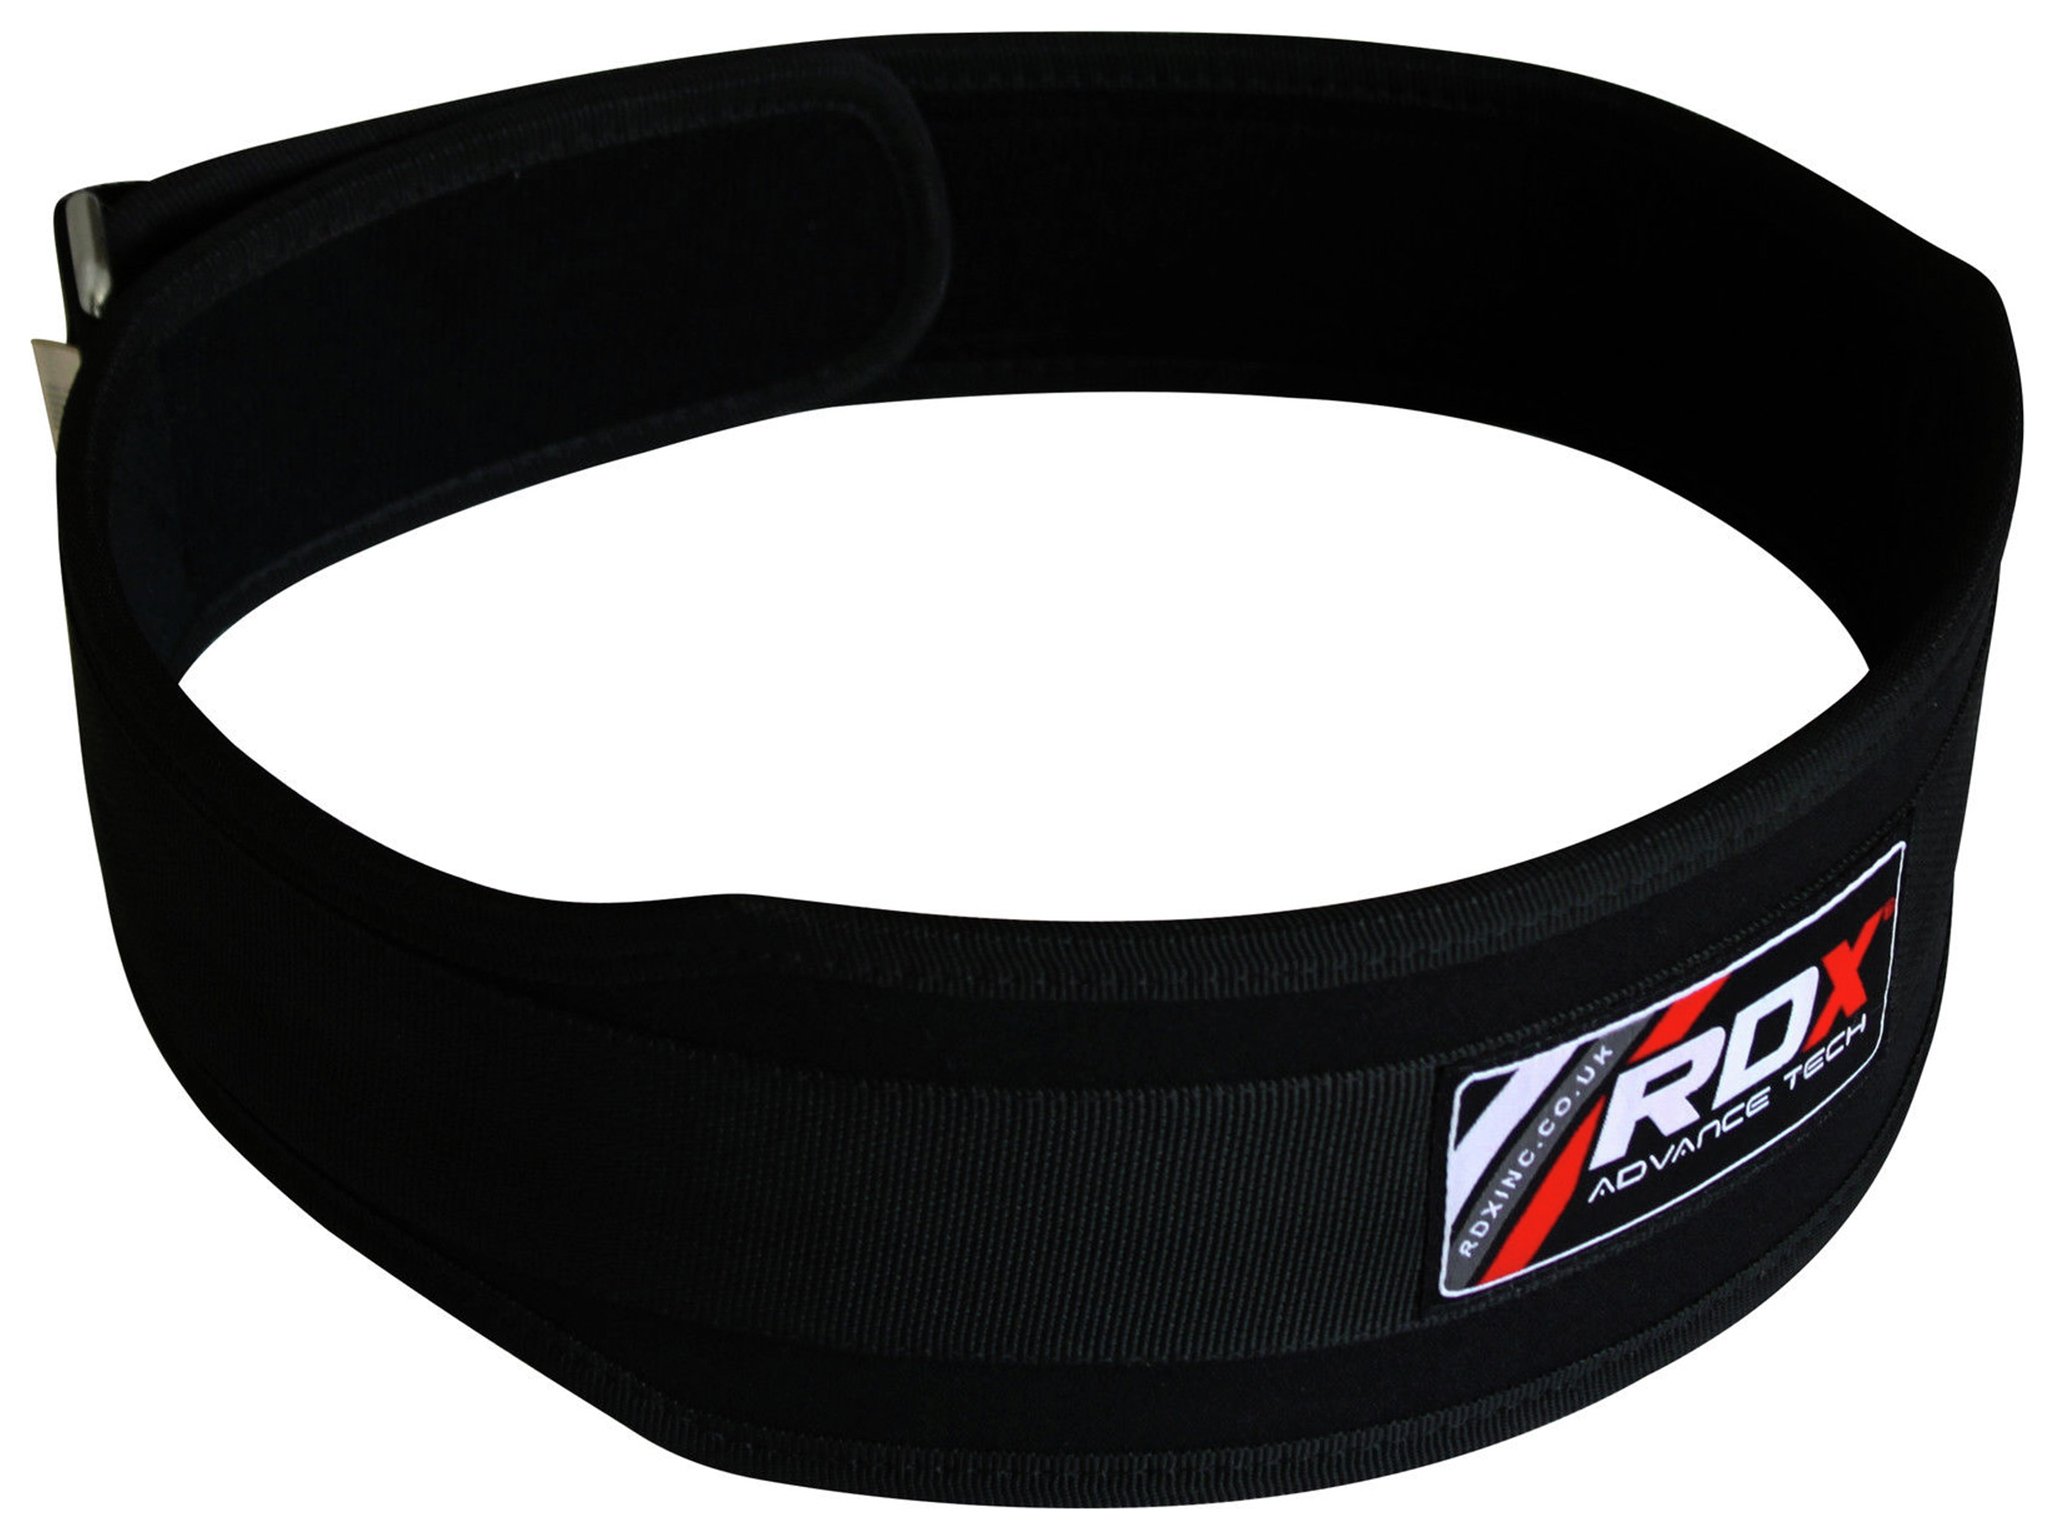 RDX Neoprene Extra Large Weight Lifting Belt - Black.